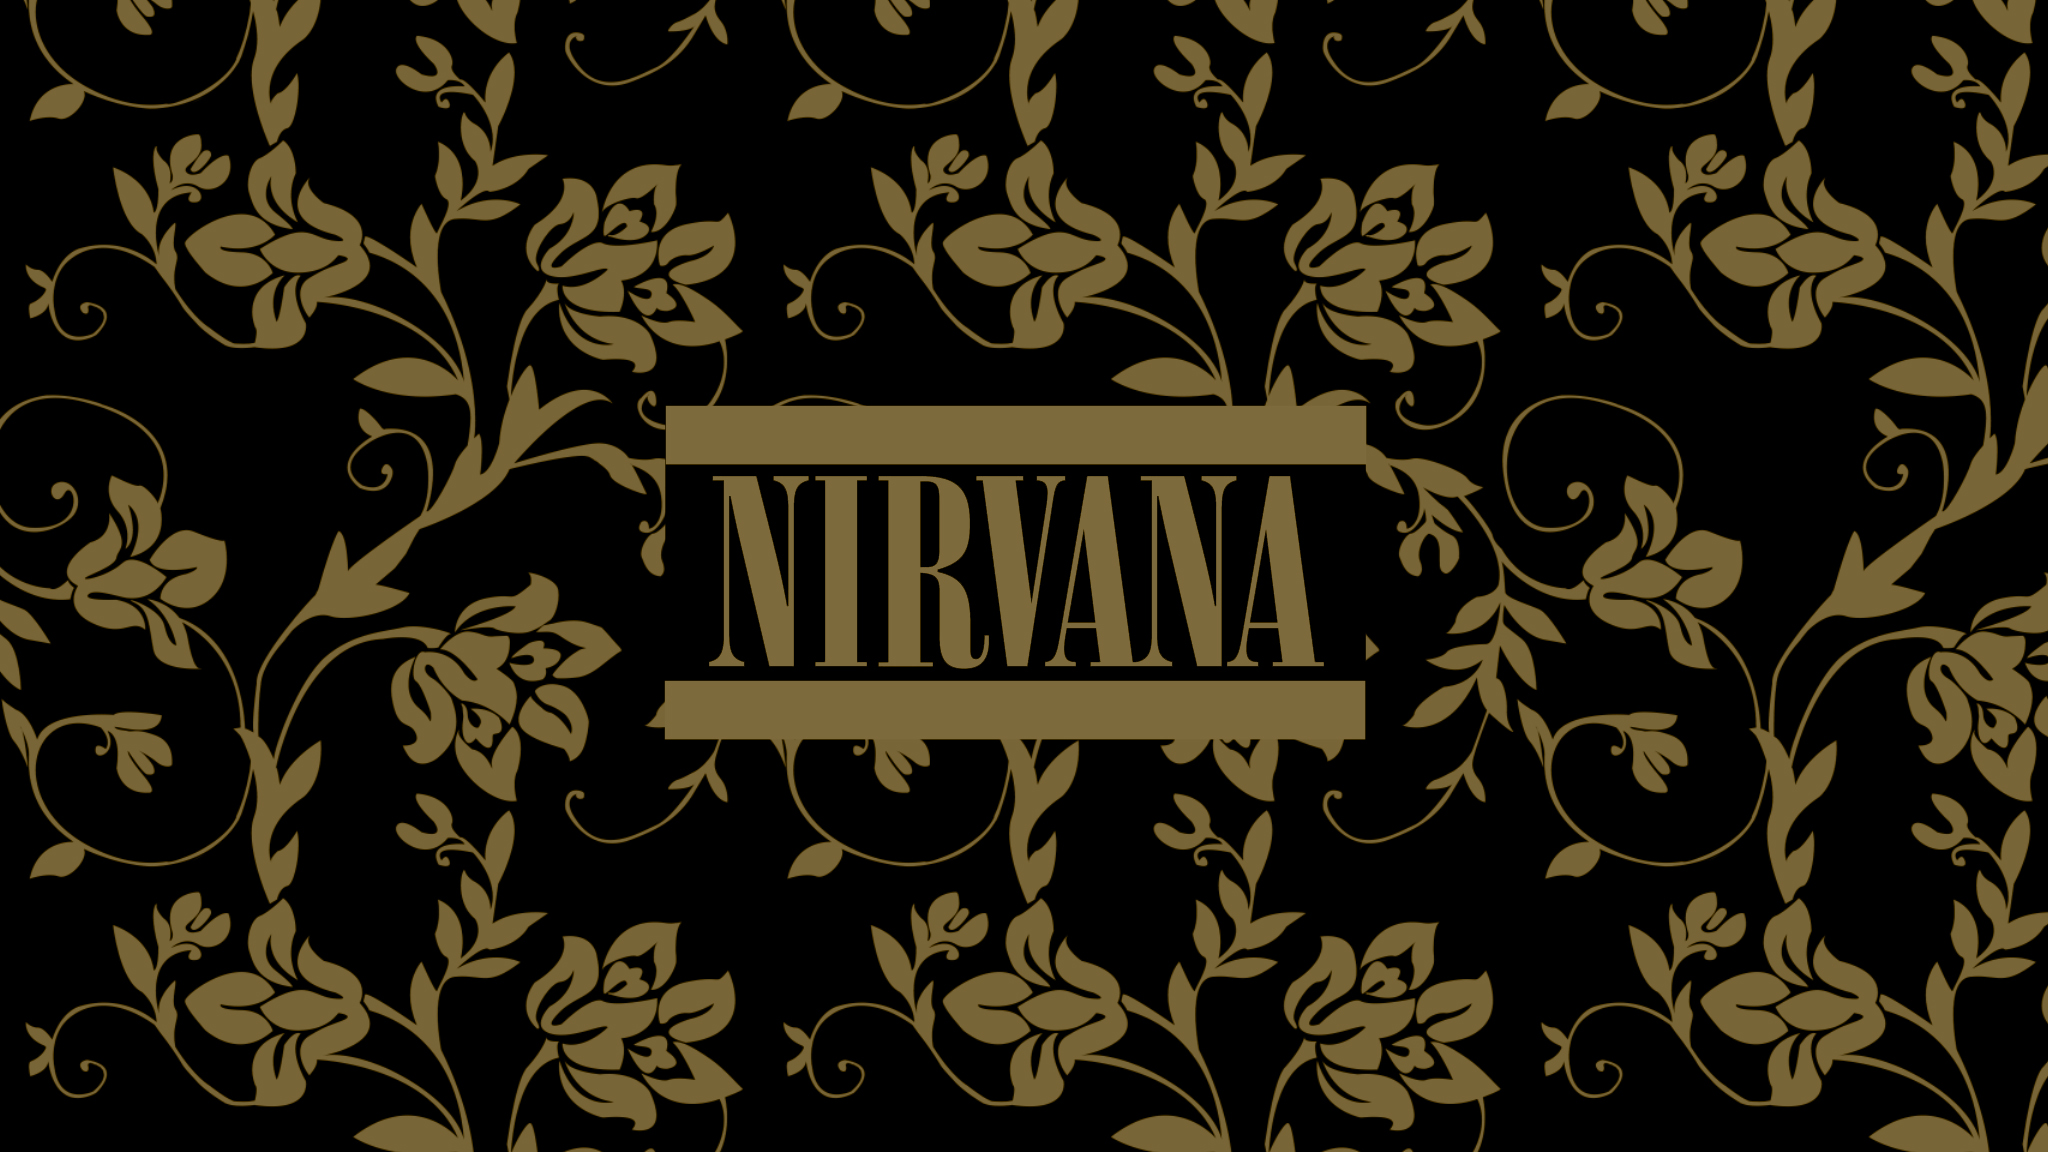 Nirvana Band Quotes QuotesGram